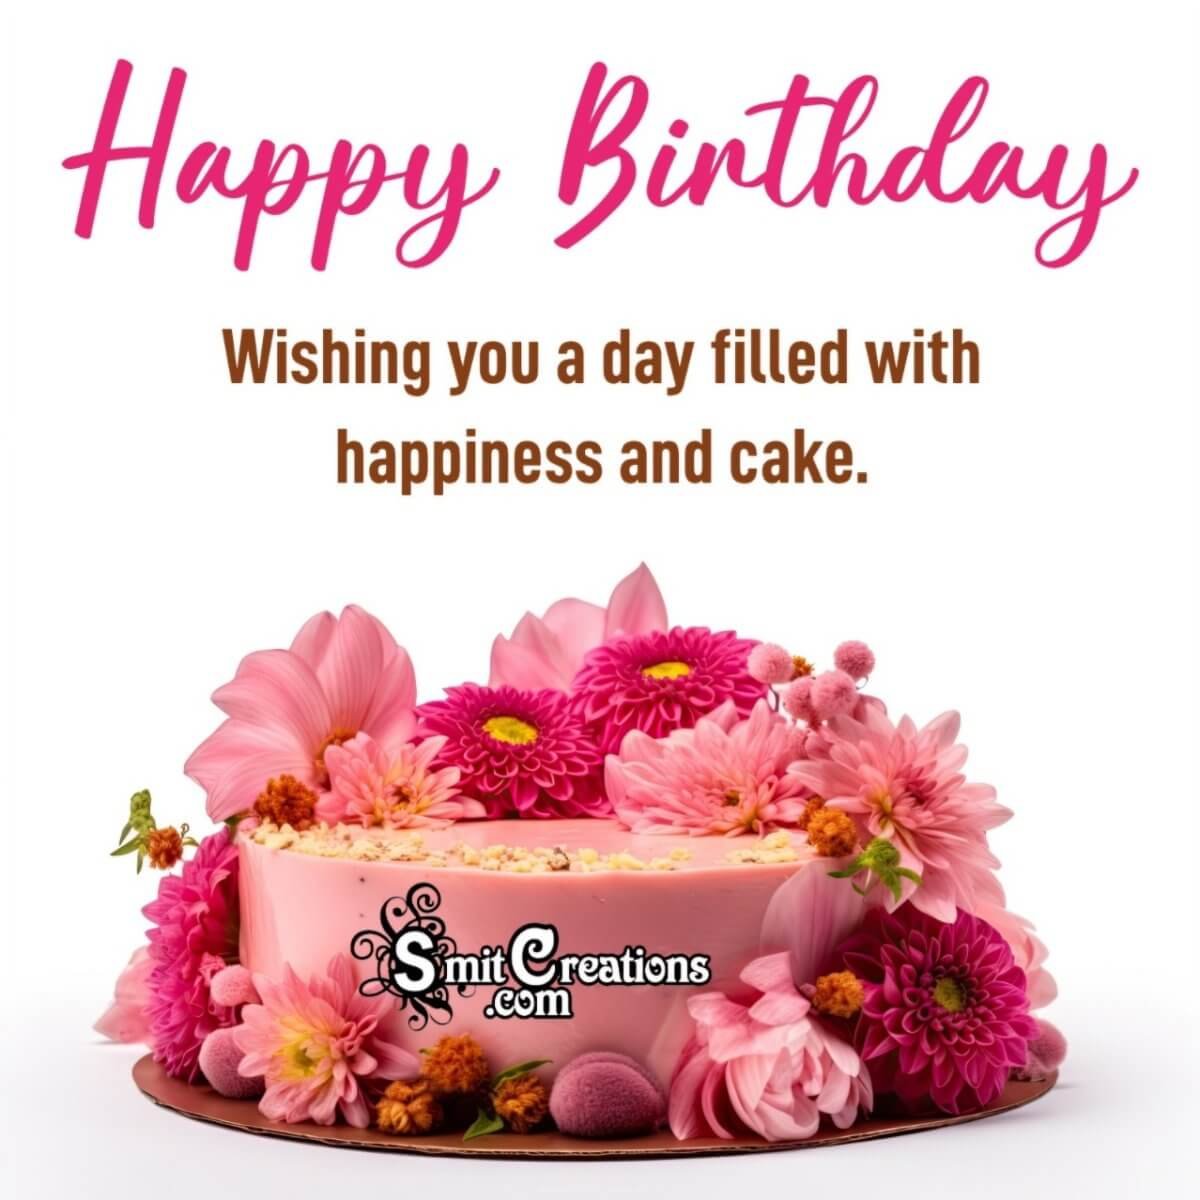 Beautiful Happy Birthday Image With Pink Cake